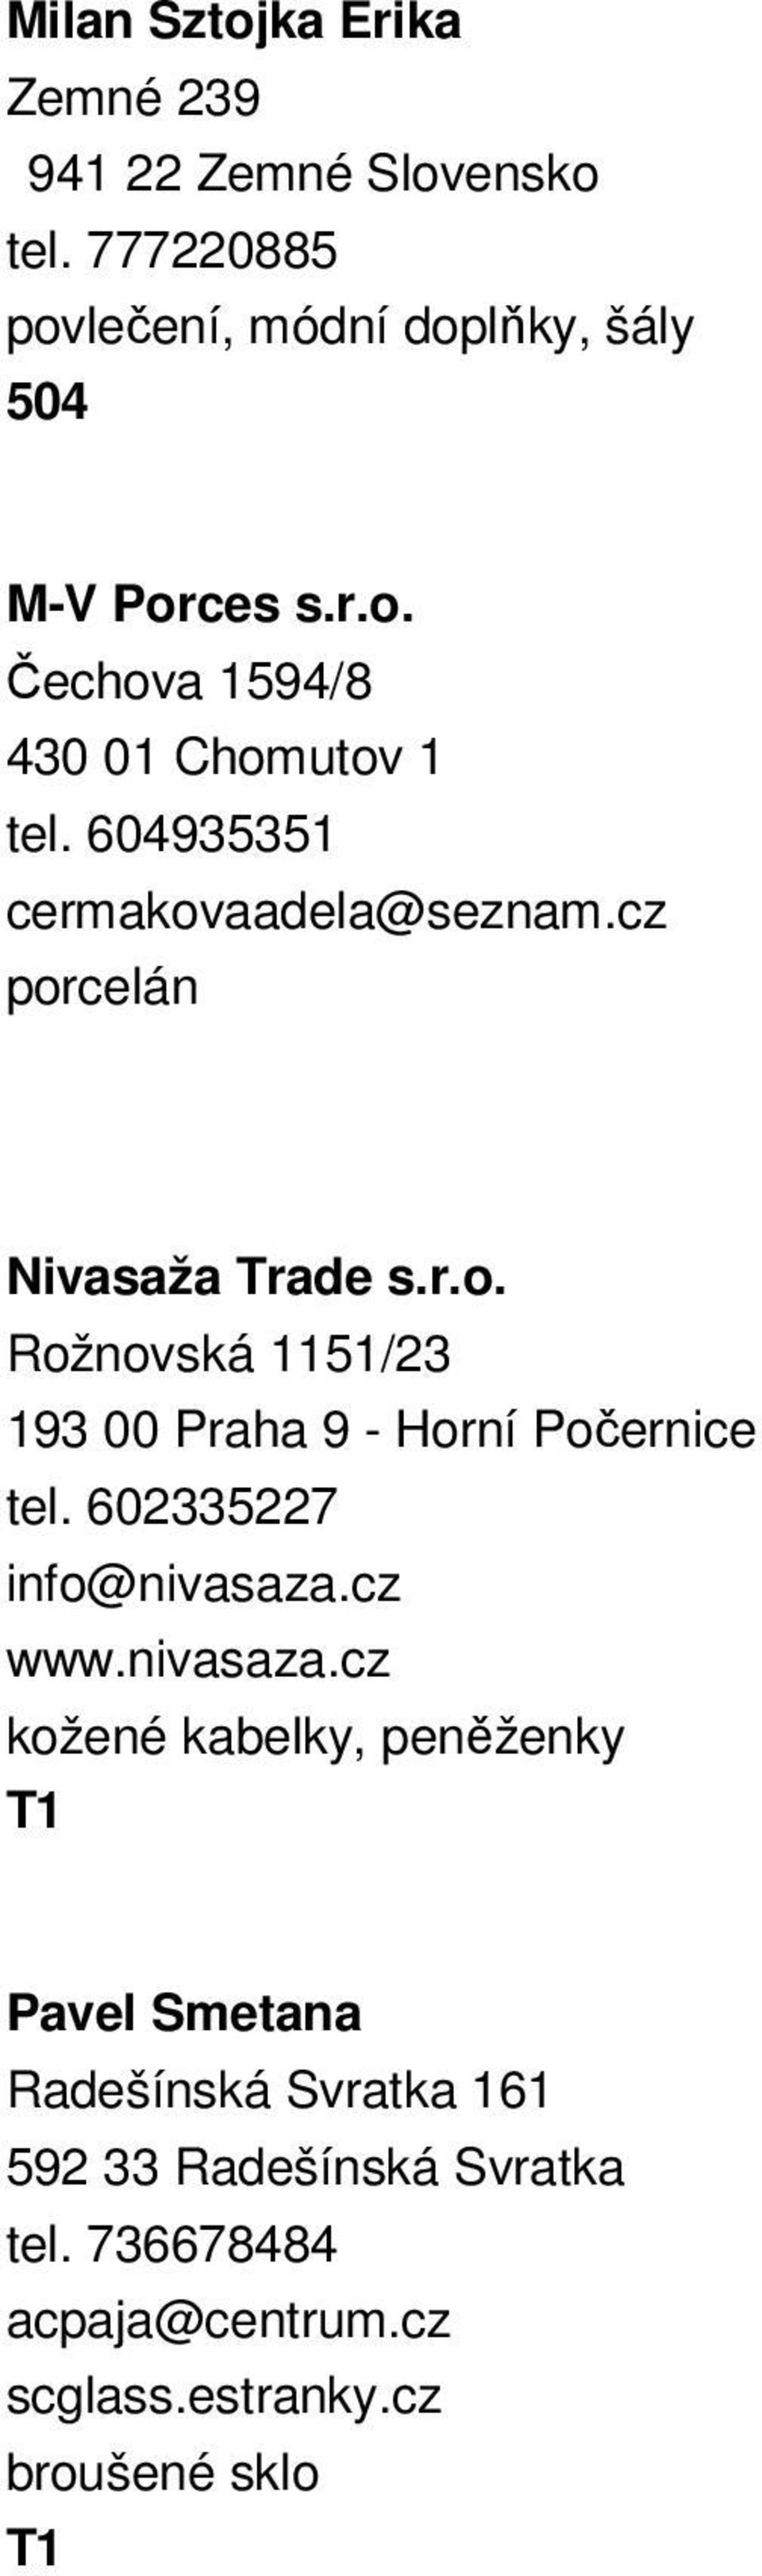 602335227 info@nivasaza.cz www.nivasaza.cz kožené kabelky, peněženky Pavel Smetana Radešínská Svratka 161 592 33 Radešínská Svratka tel.